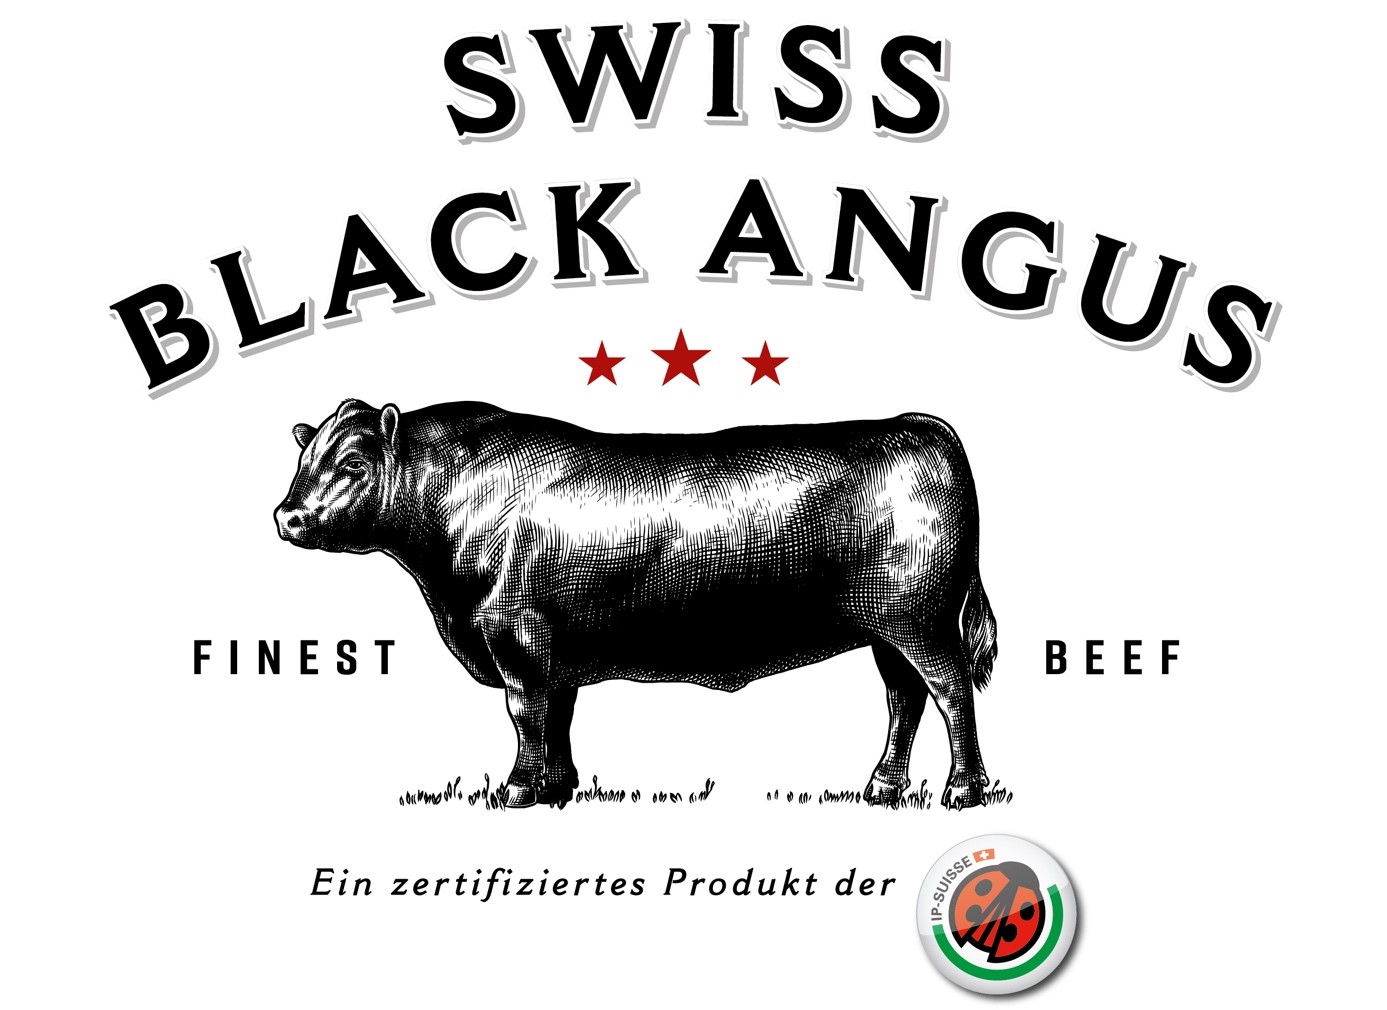 Swiss Black Angus